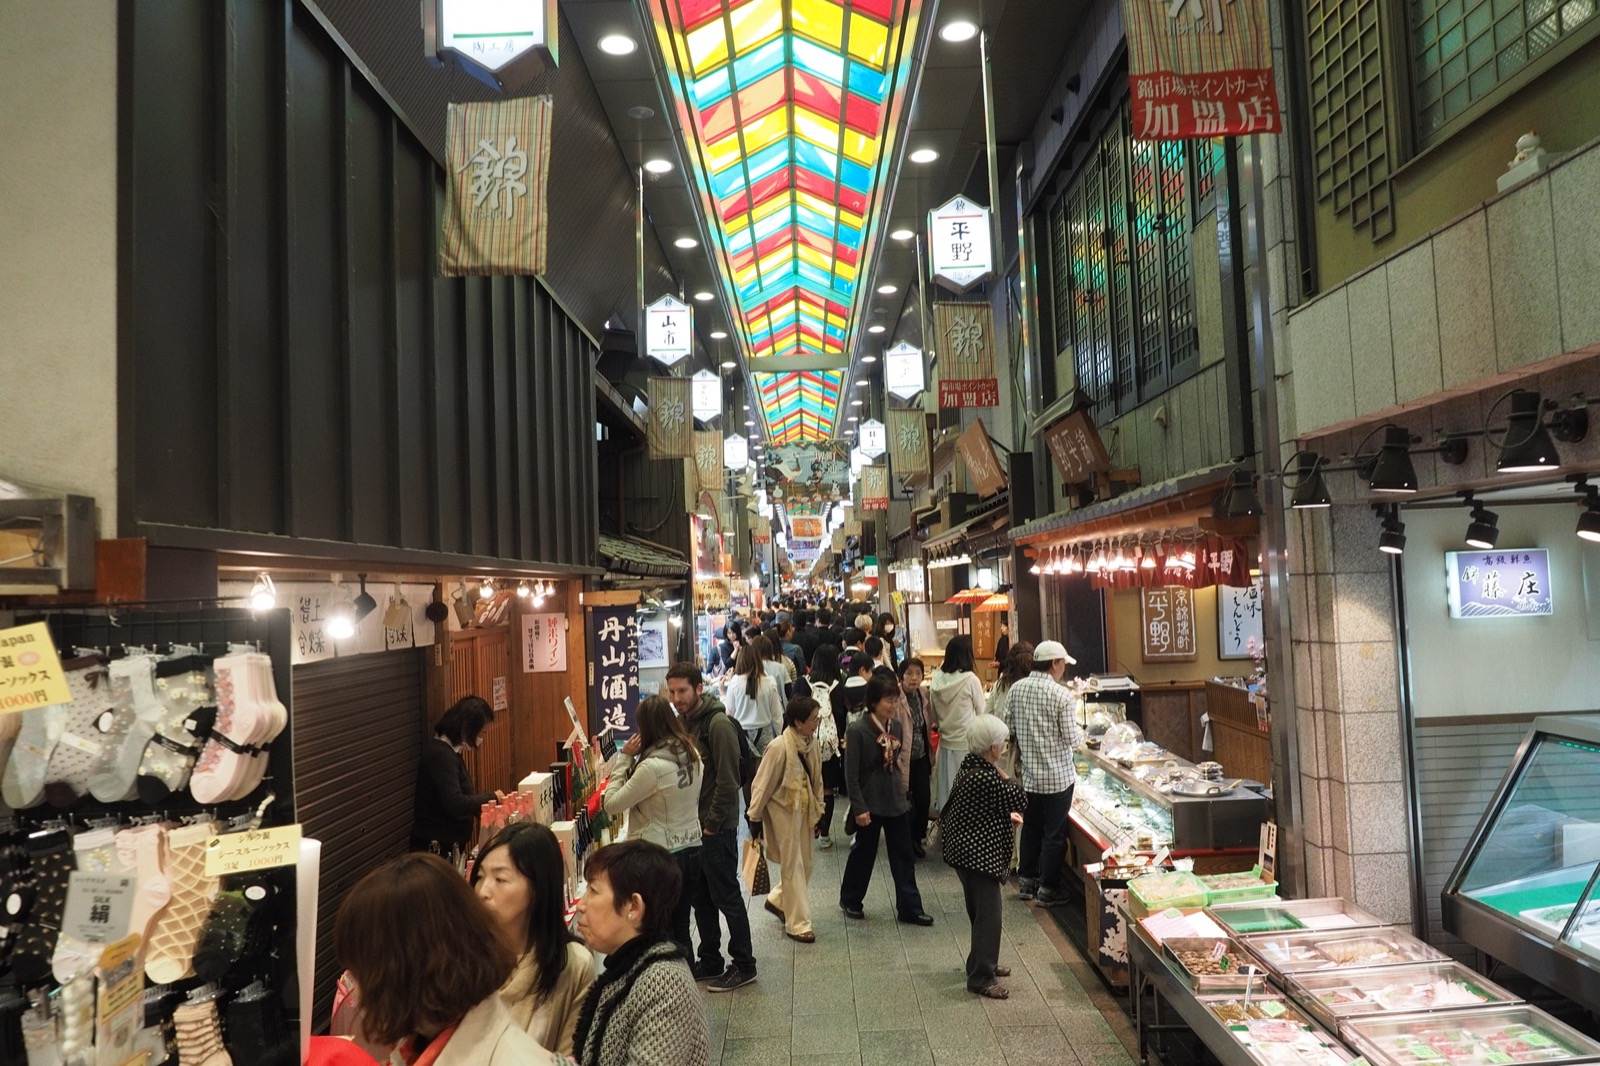 Photo of Nishiki Market, Japan (京都 錦市場 by othree)